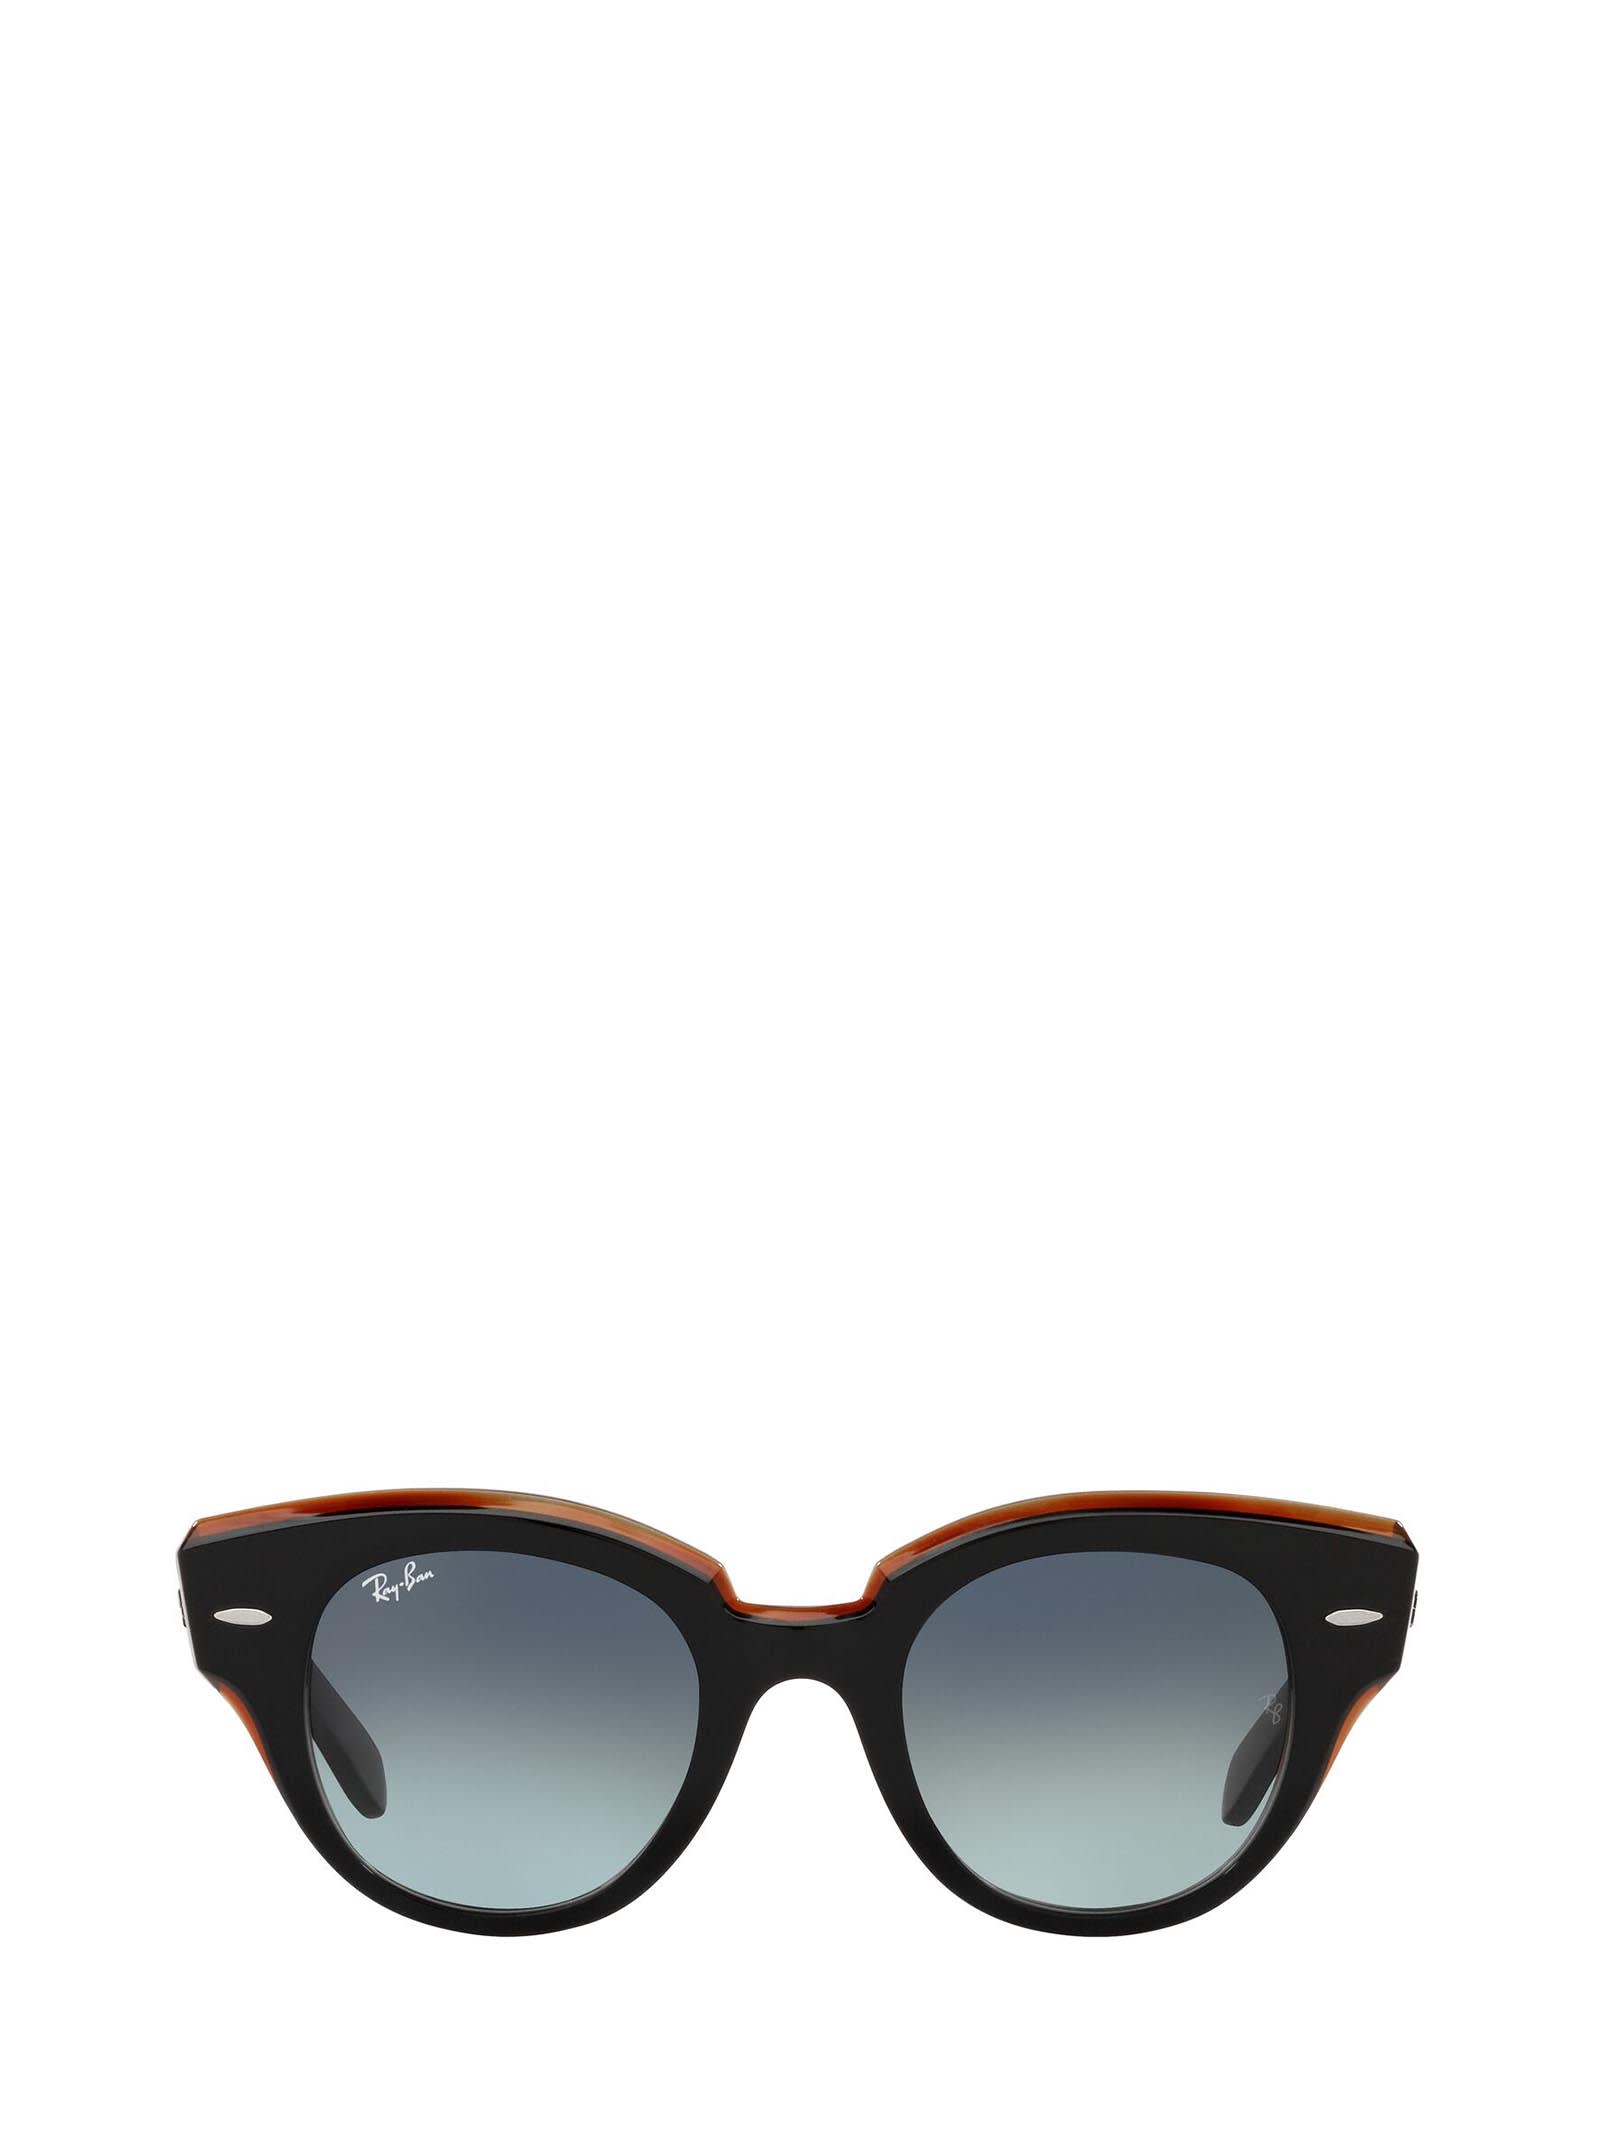 Ray-Ban Ray-ban Rb2192 Black On Transparent Brown Sunglasses